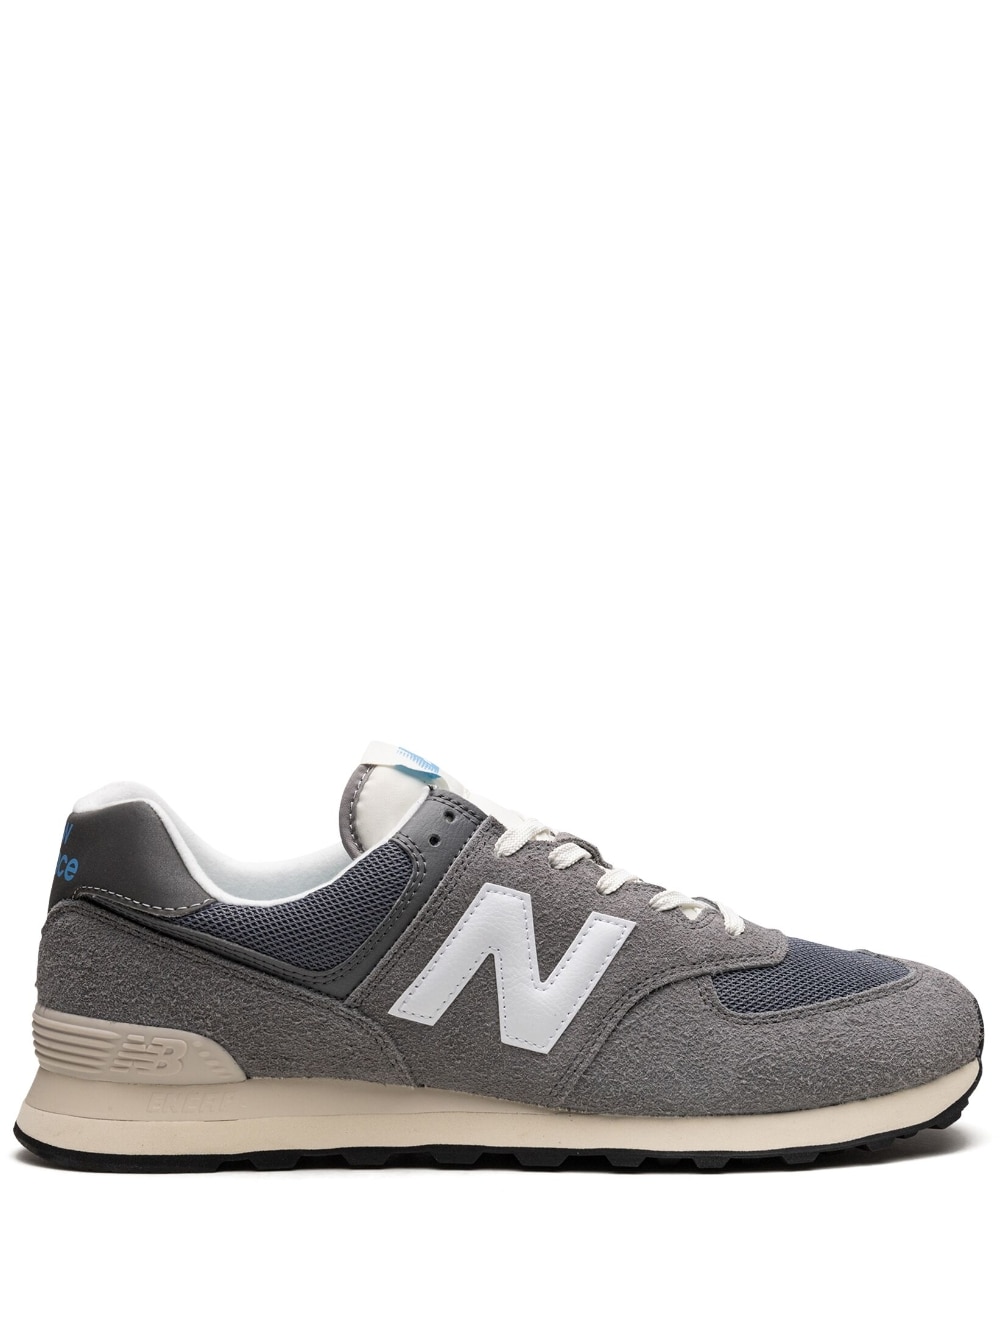 New Balance 574 "Apollo Grey" sneakers